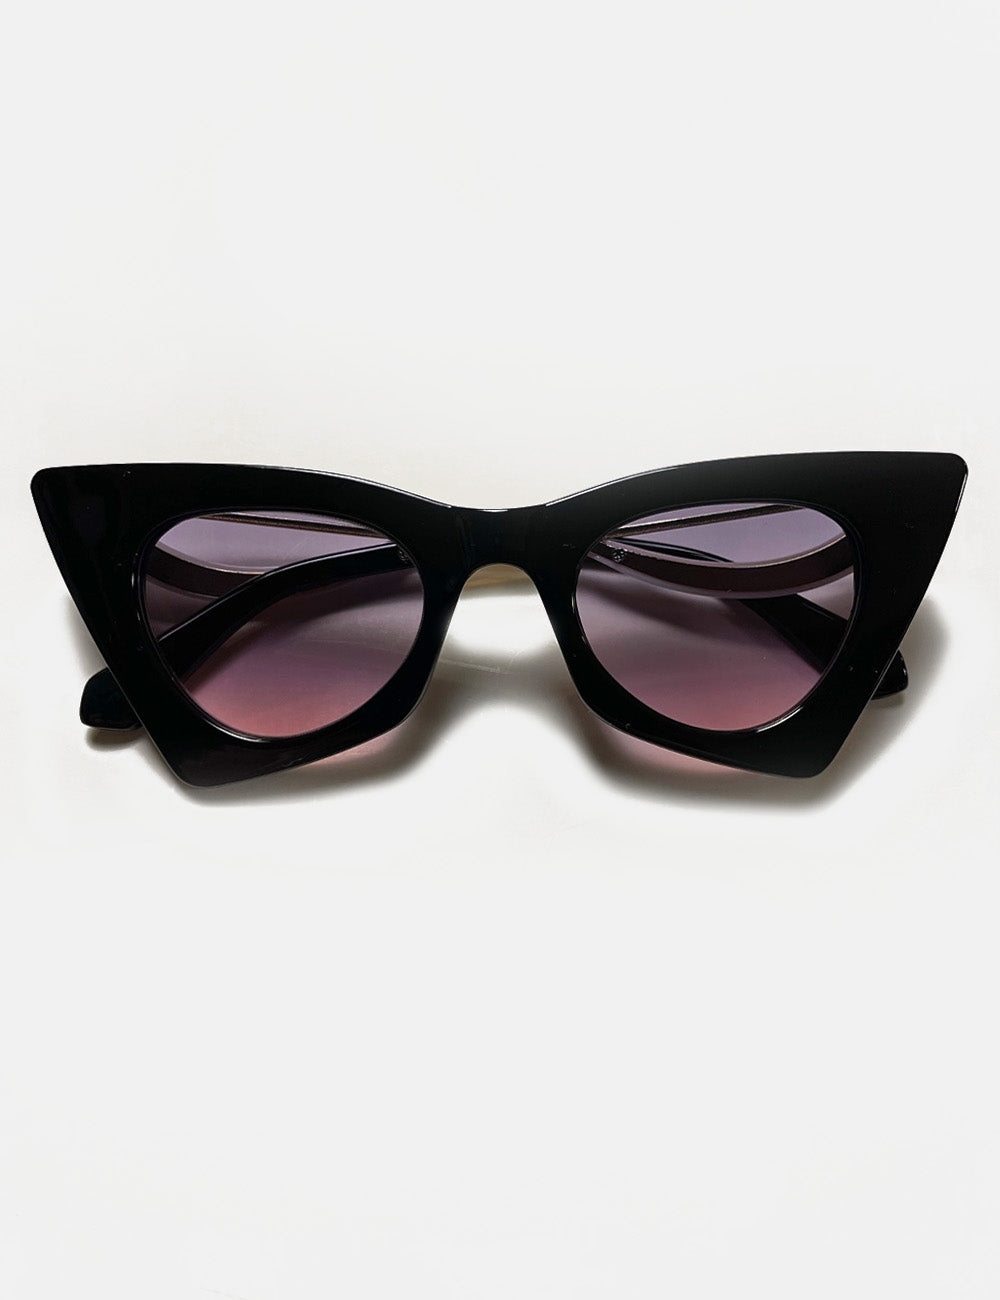 Black & White Unique Geometric 1950s Cat Eye Sunglasses